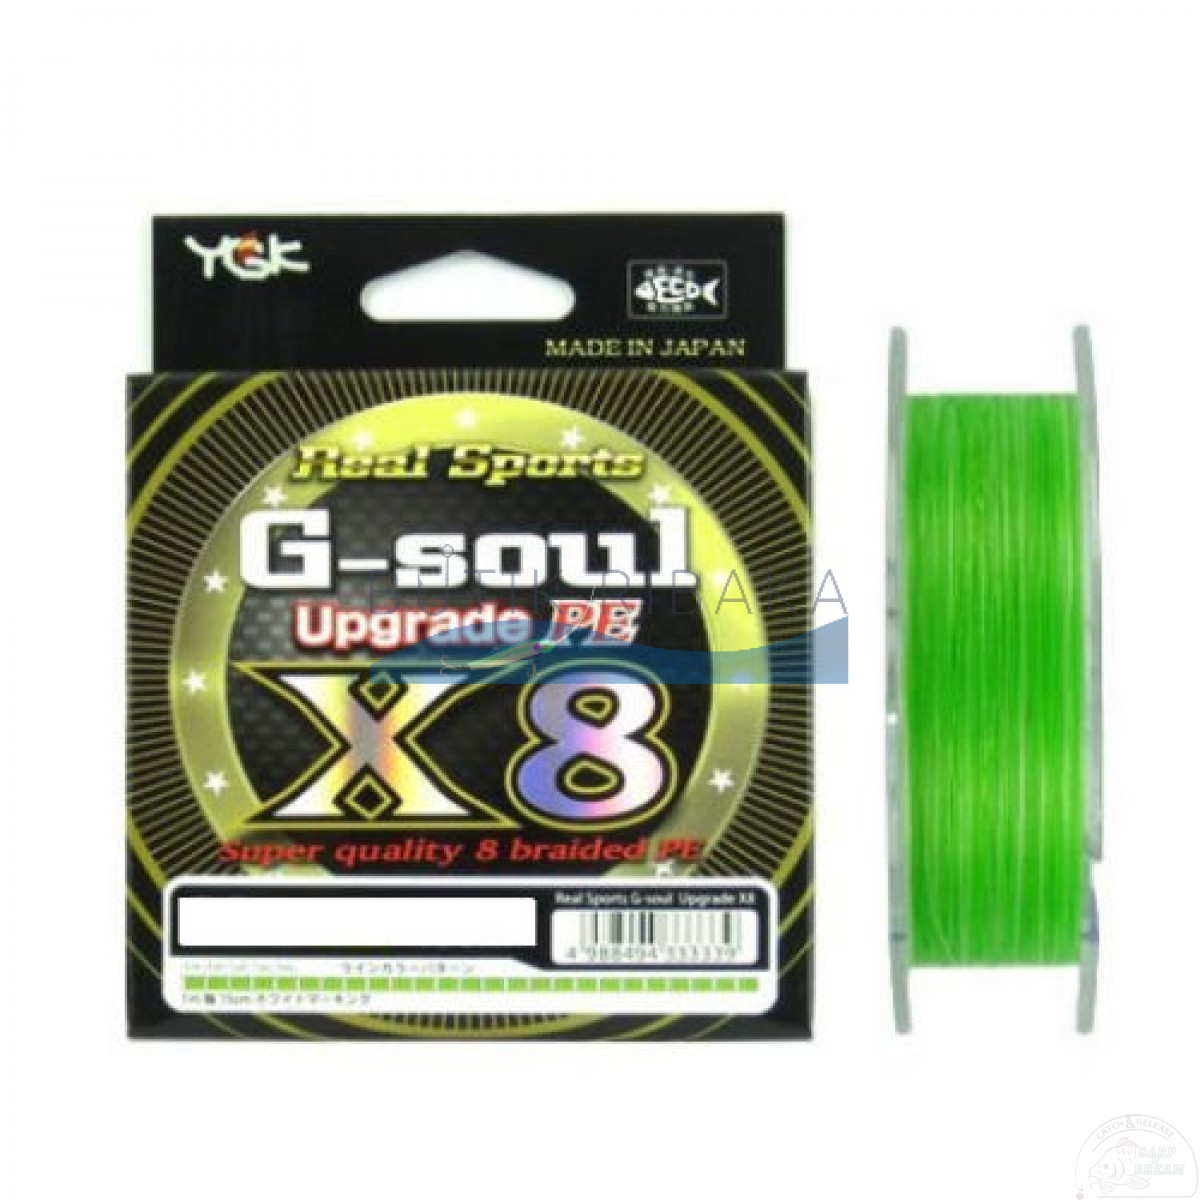 YGK G-Soul PE X8 Upgrade 1.5 150м